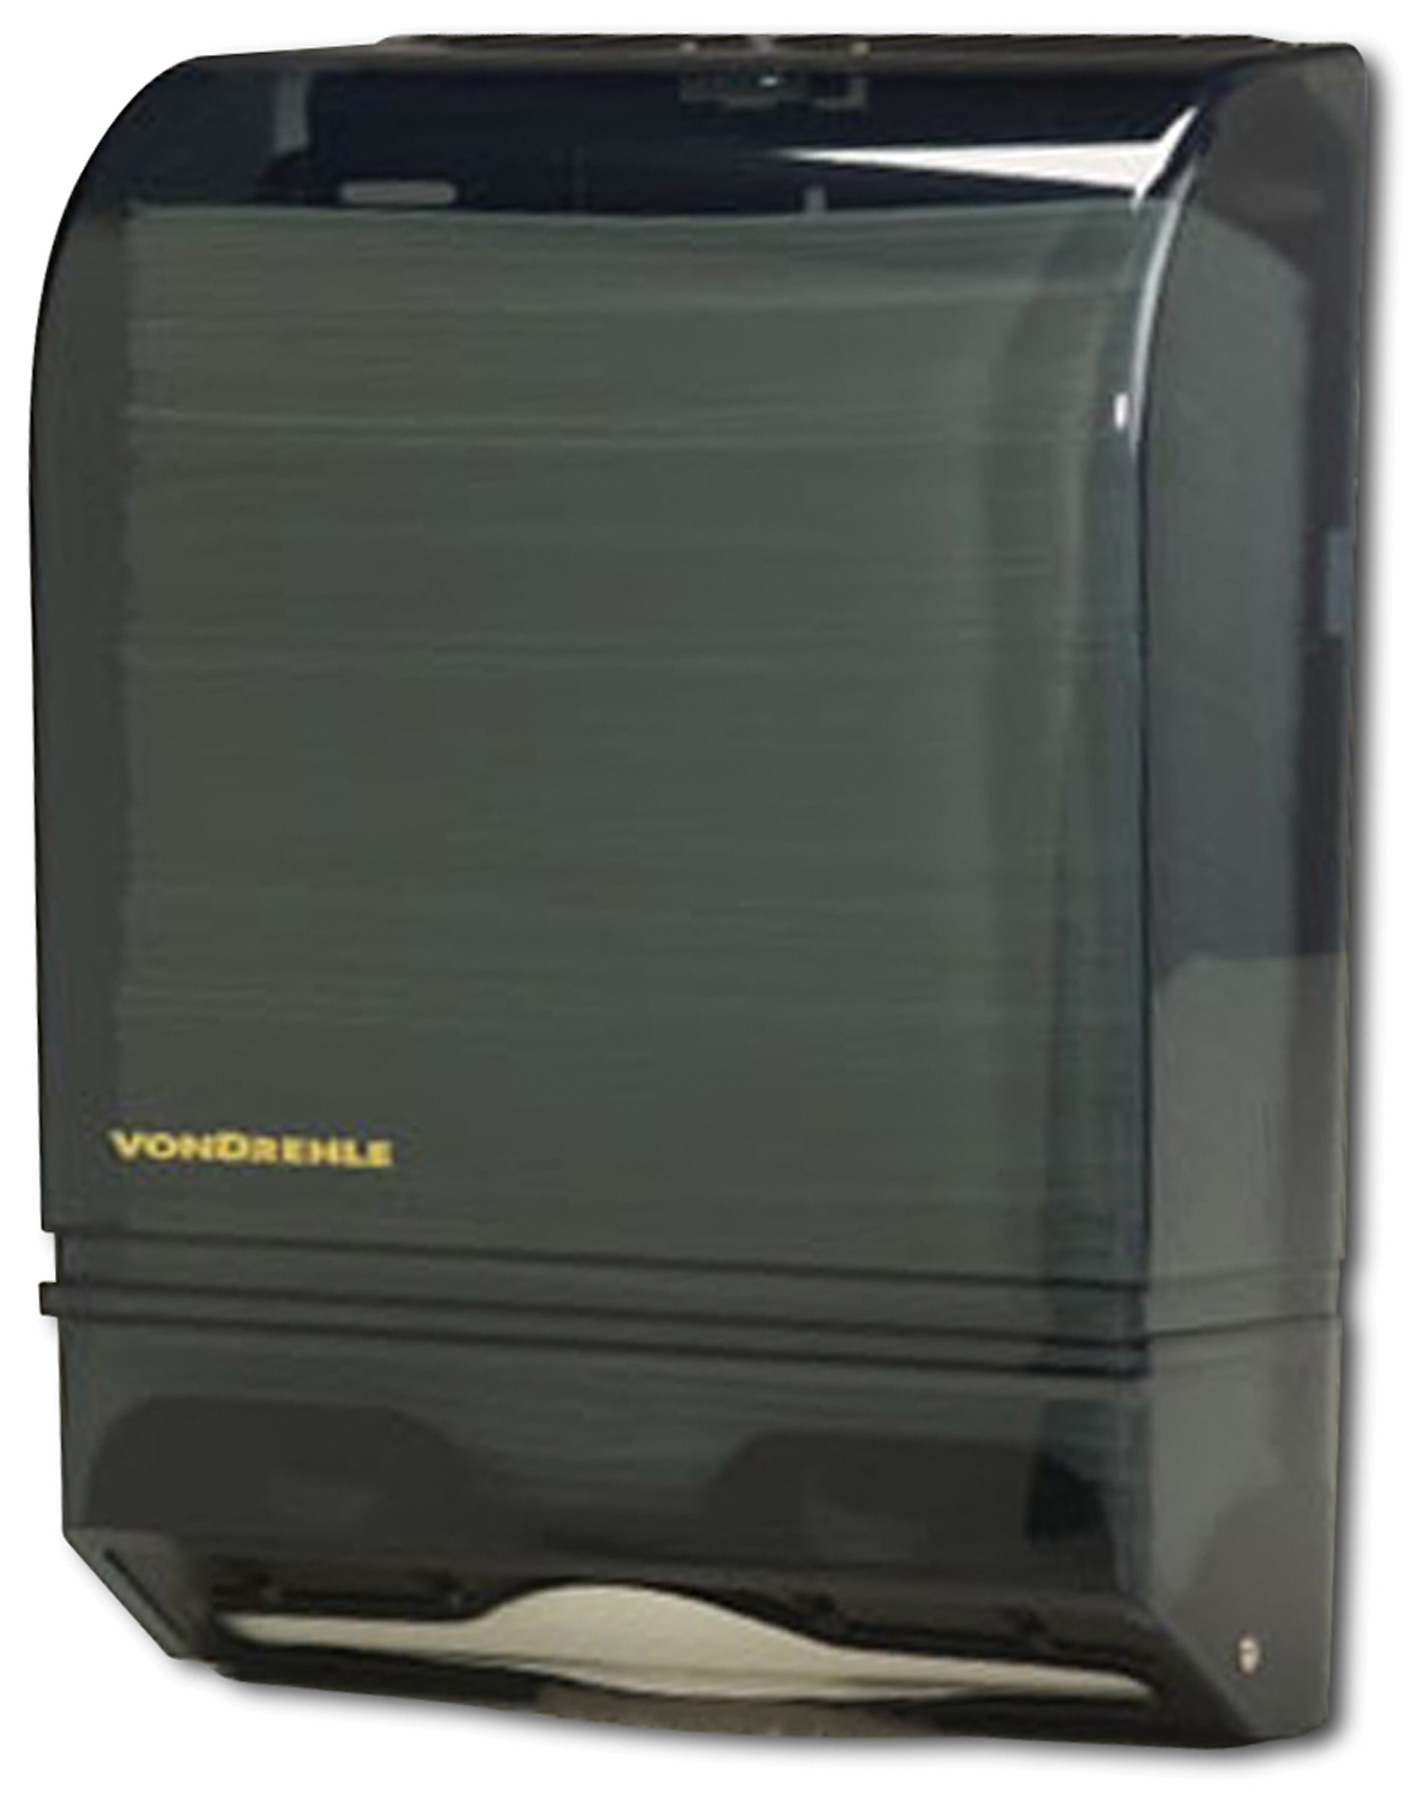 VonDrehle Multi-Fold/C-Fold Dispenser, Smoked